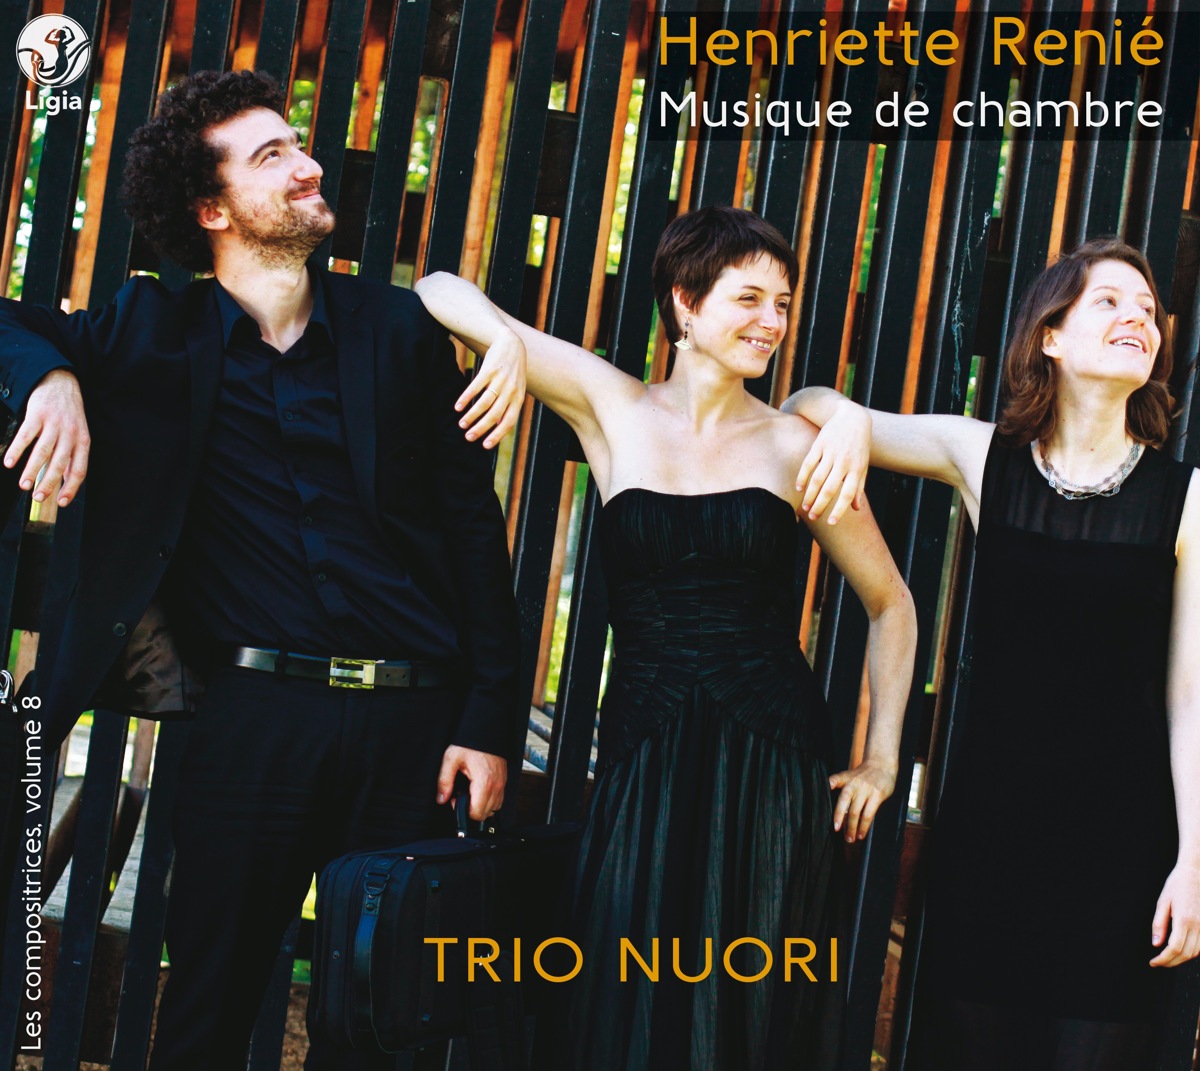 Trio NUORI - Henriette Renié